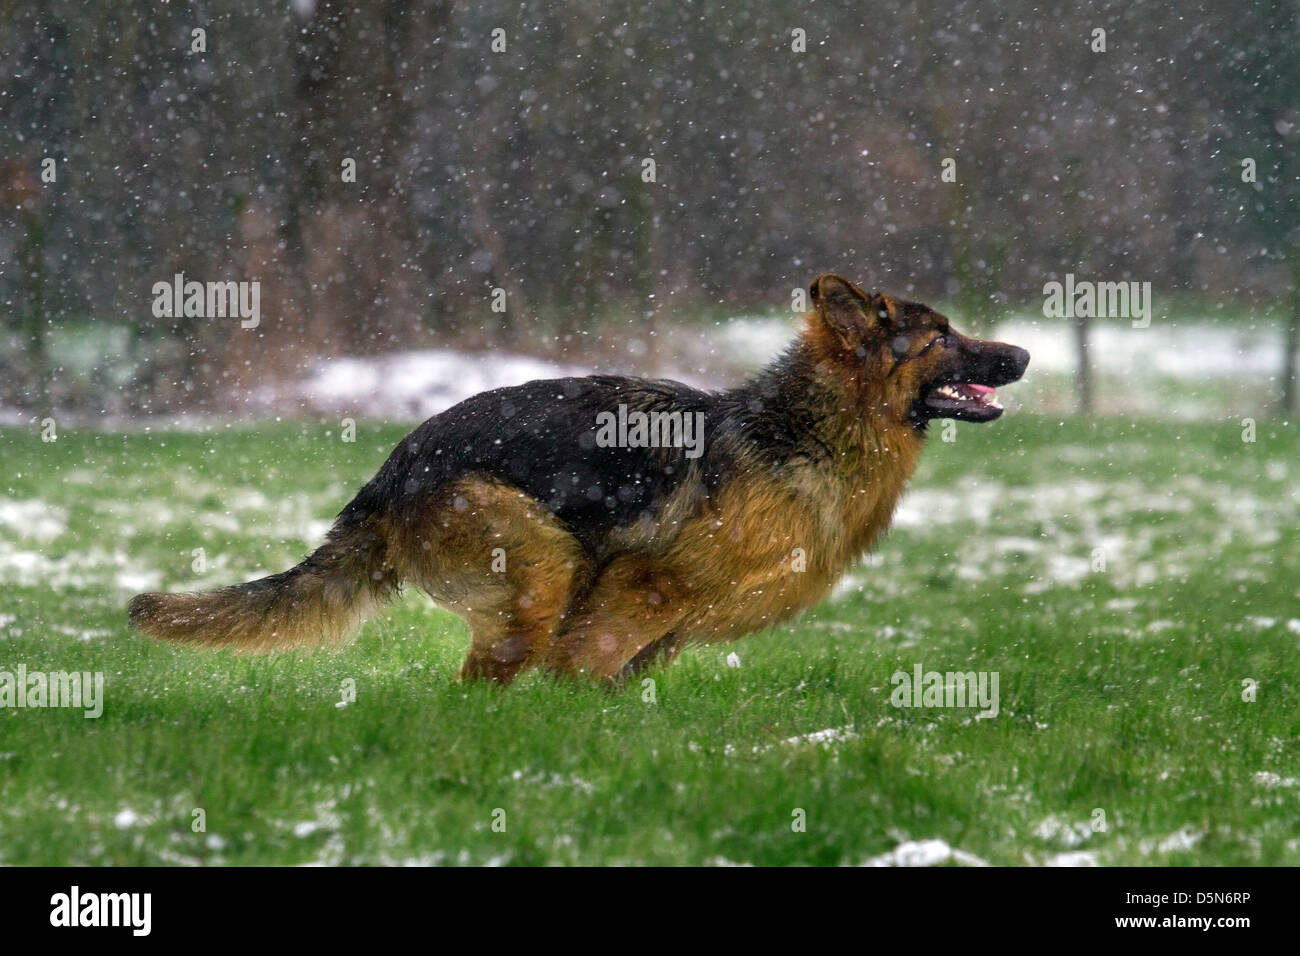 Alsatian / German Shepherd dog (Canis lupus familiaris) running in garden during snow shower in winter Stock Photo